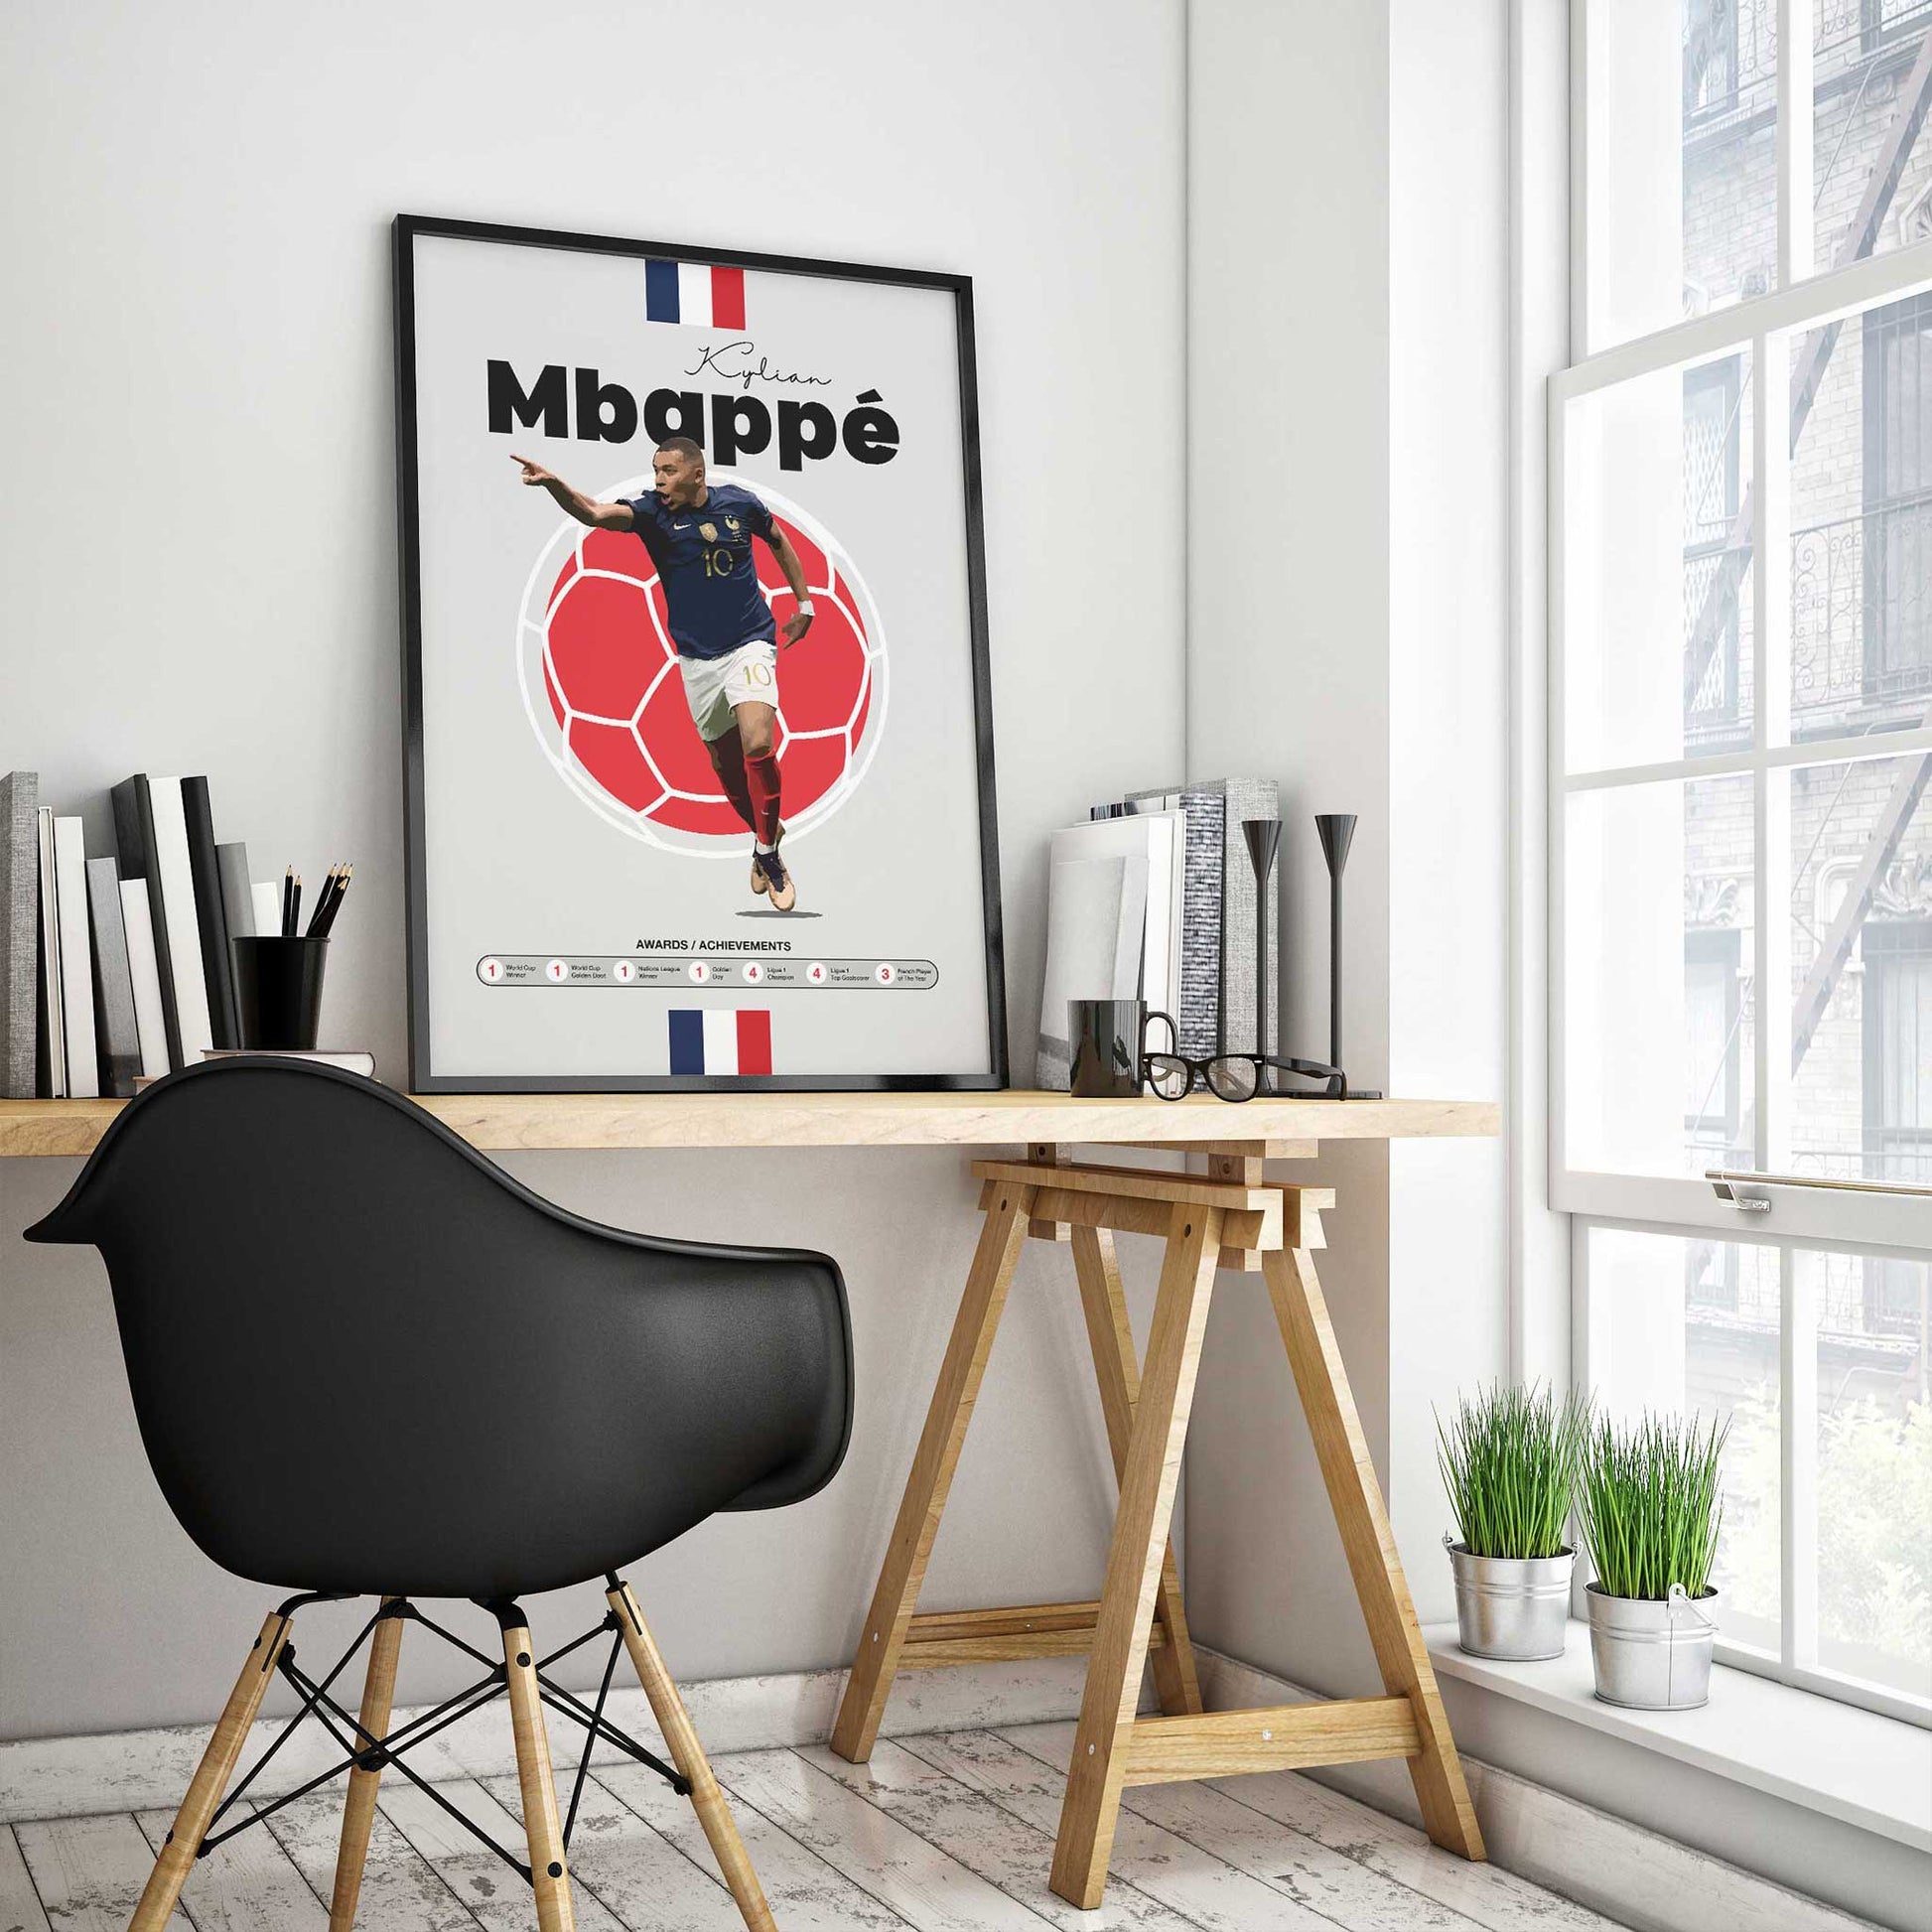 Kylian Mbappé - Legendary Player Profile Football Poster – First